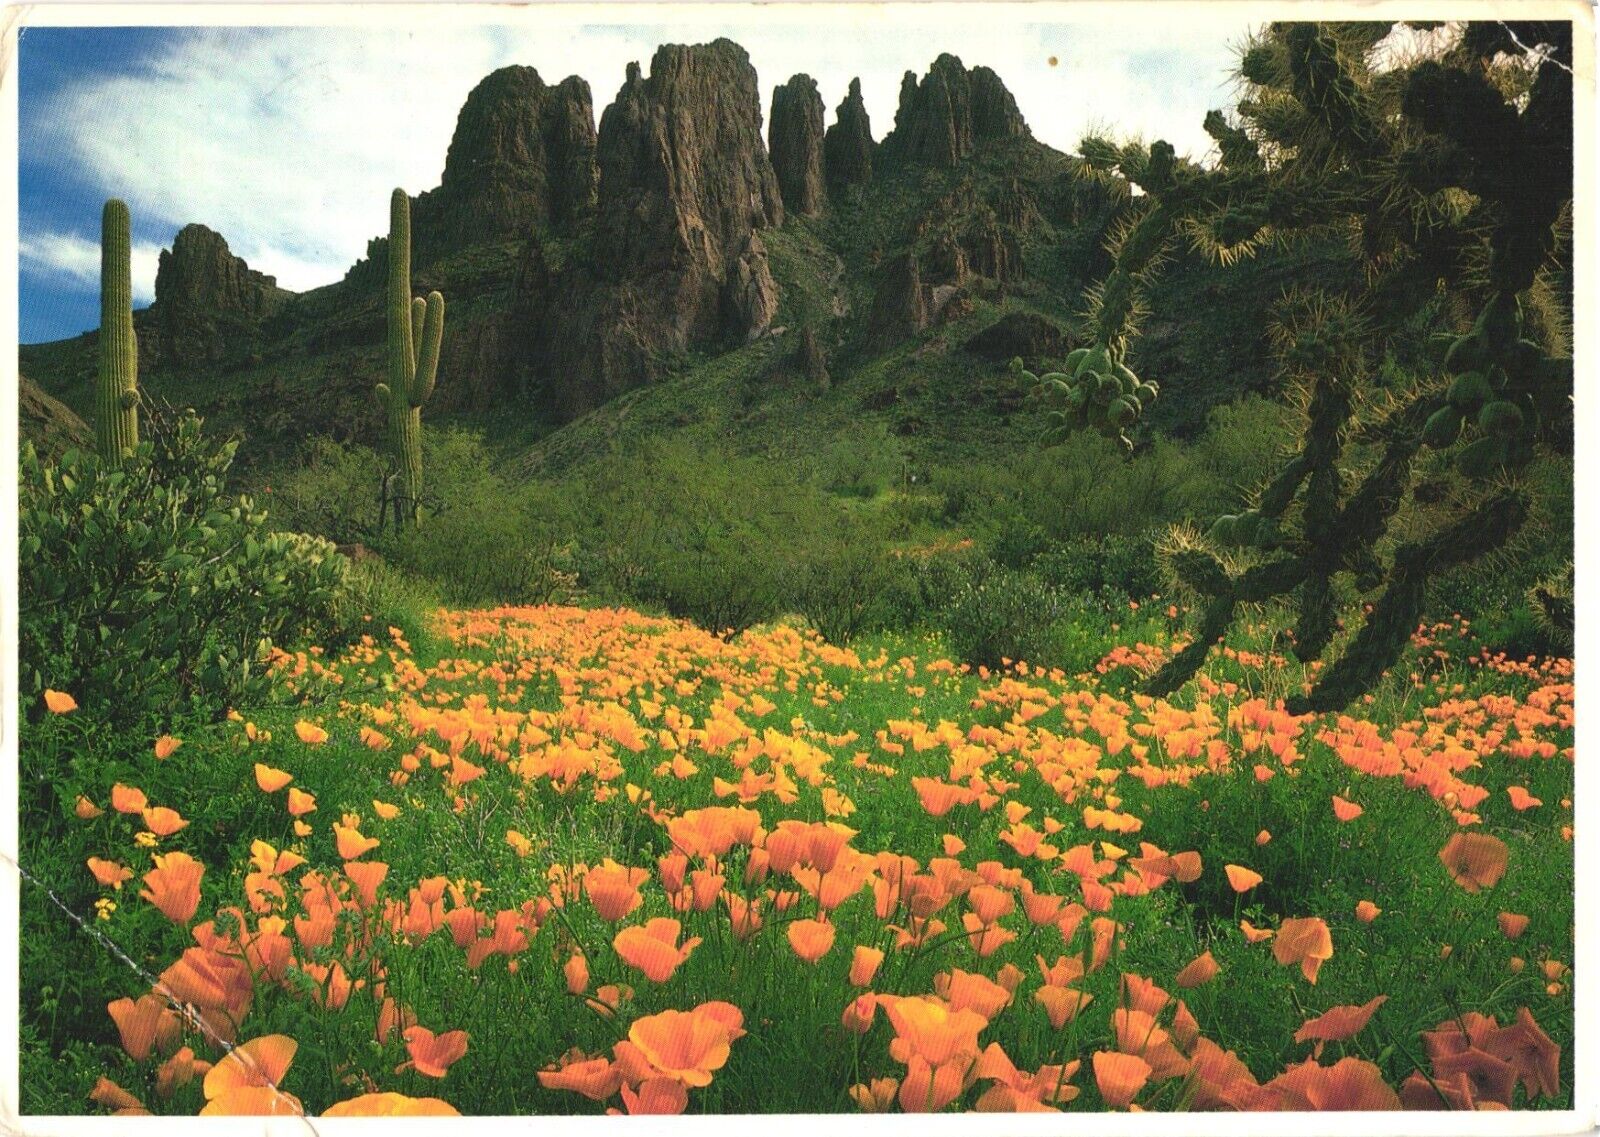 Gold Poppies, Ajo Mountains-Organ Pipe National Monument, Arizona Postcard